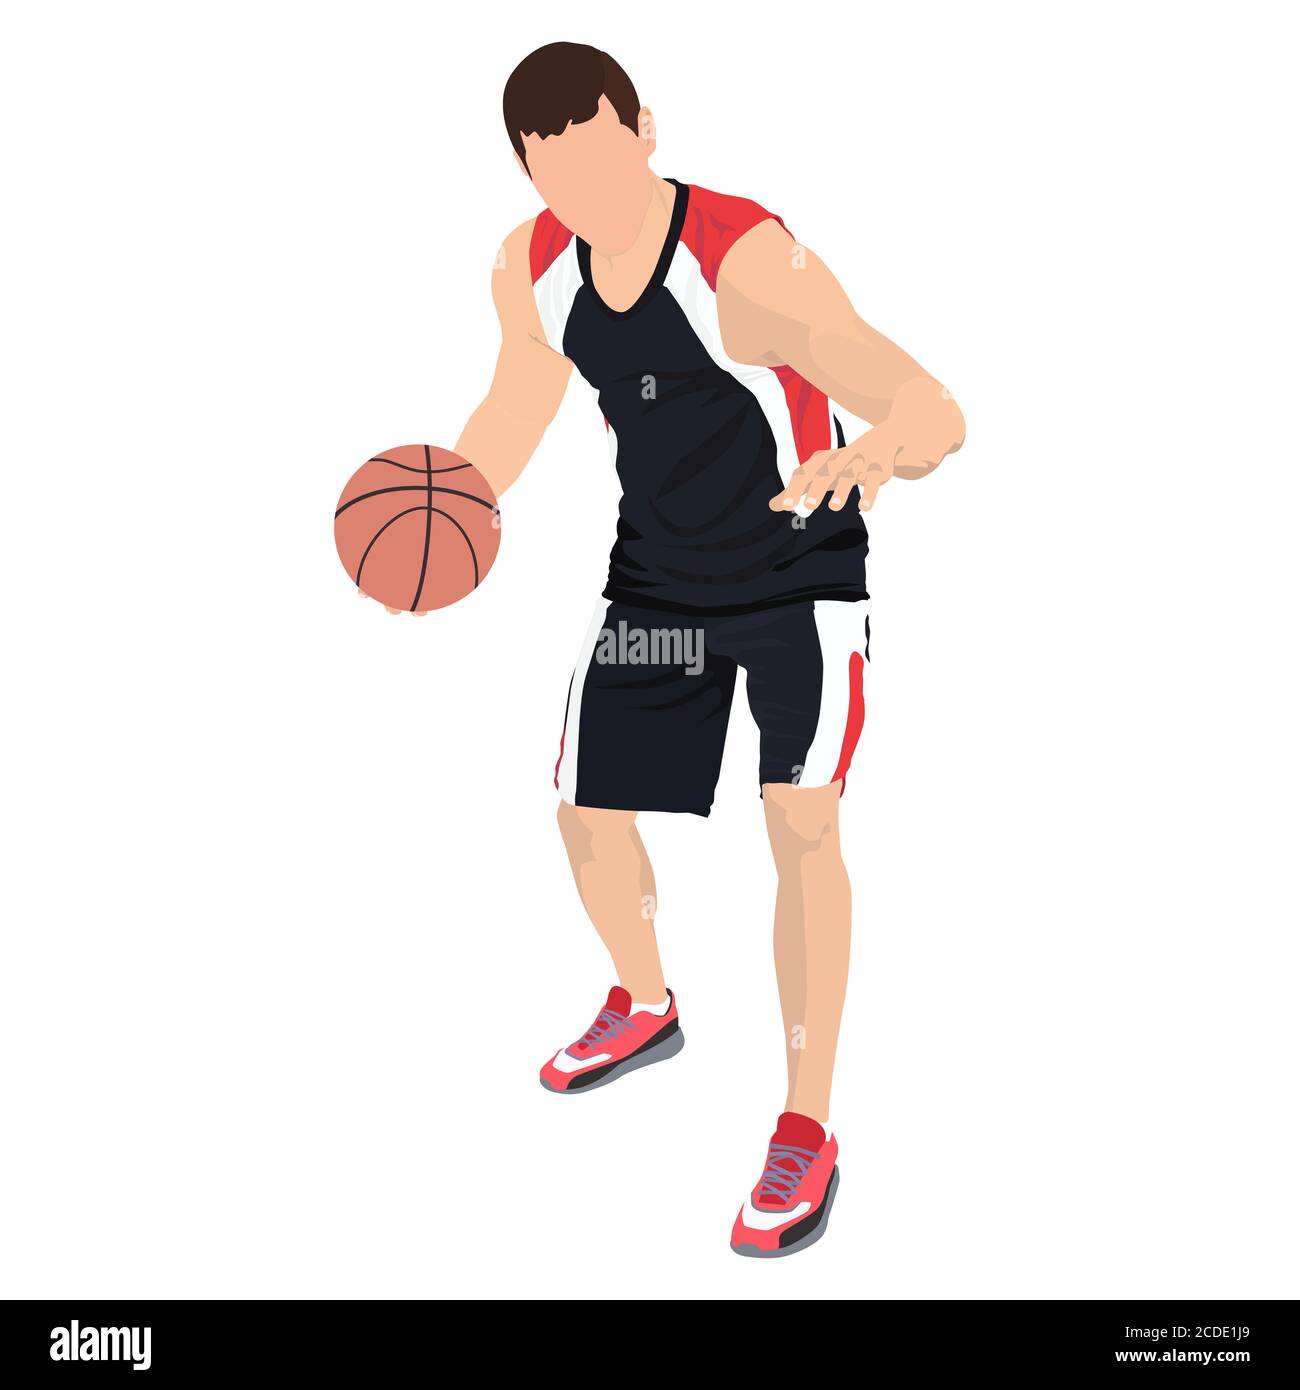 Professional basketball player with ball, vector illustration. Basketball dribbling skills. Stock Vector